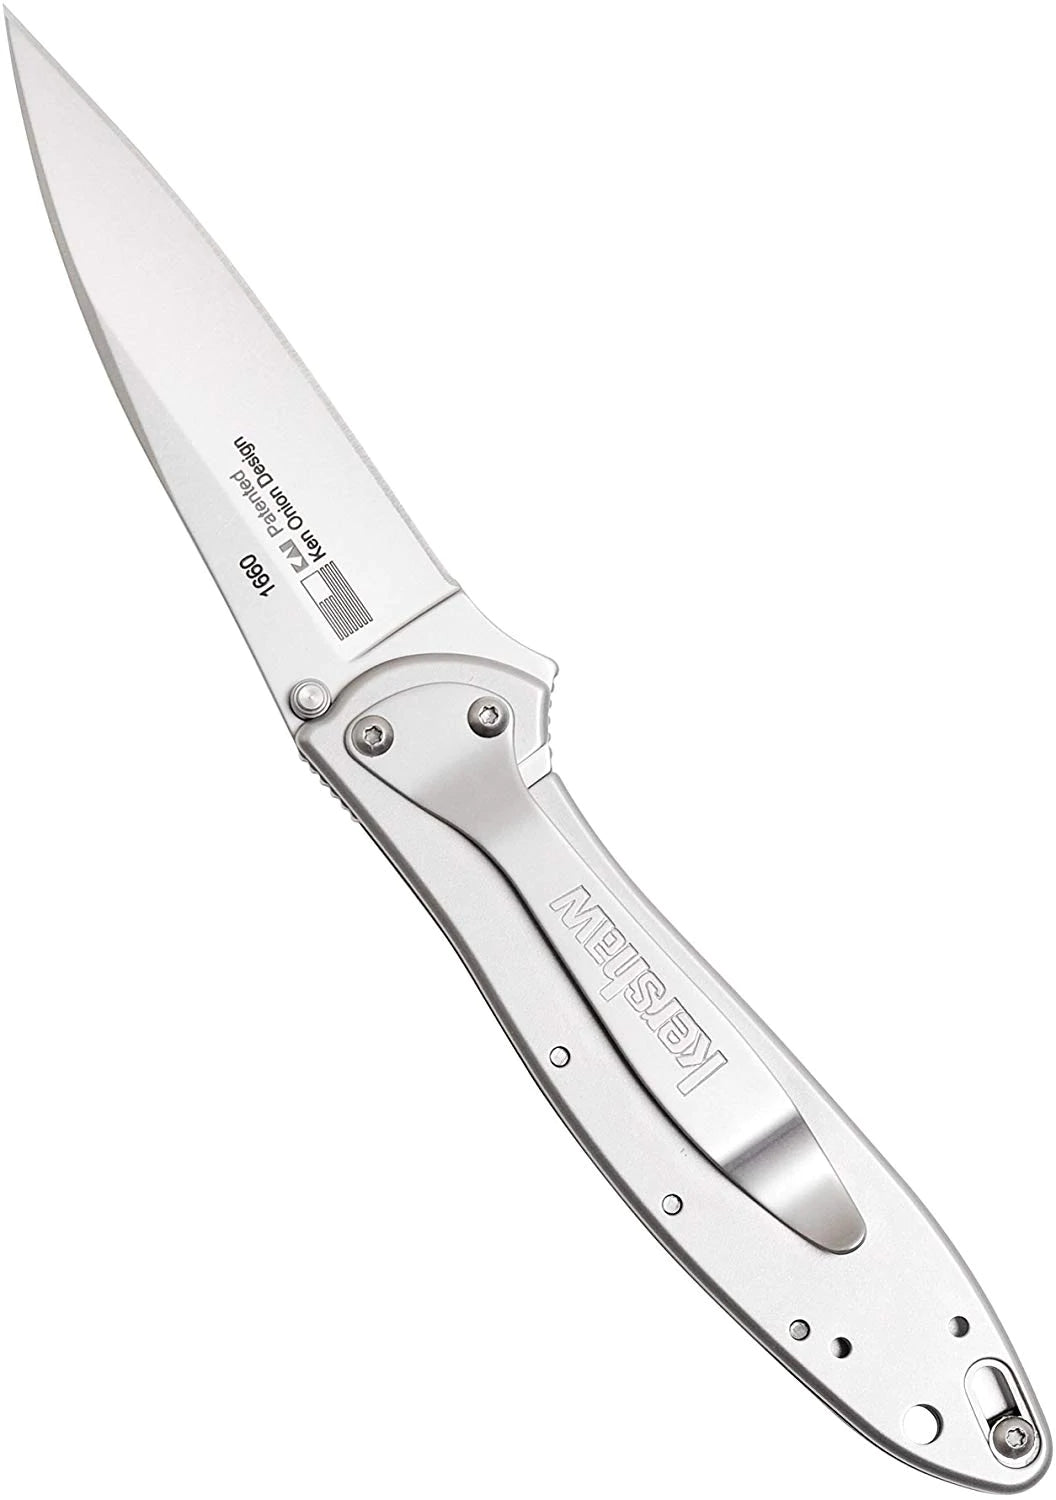 Kershaw Leek Pocket Knife (1660) 3-In. Blade and Stainless Steel Handle - Frame Lock- SpeedSafe Assisted Opening- Reversible Pocketclip